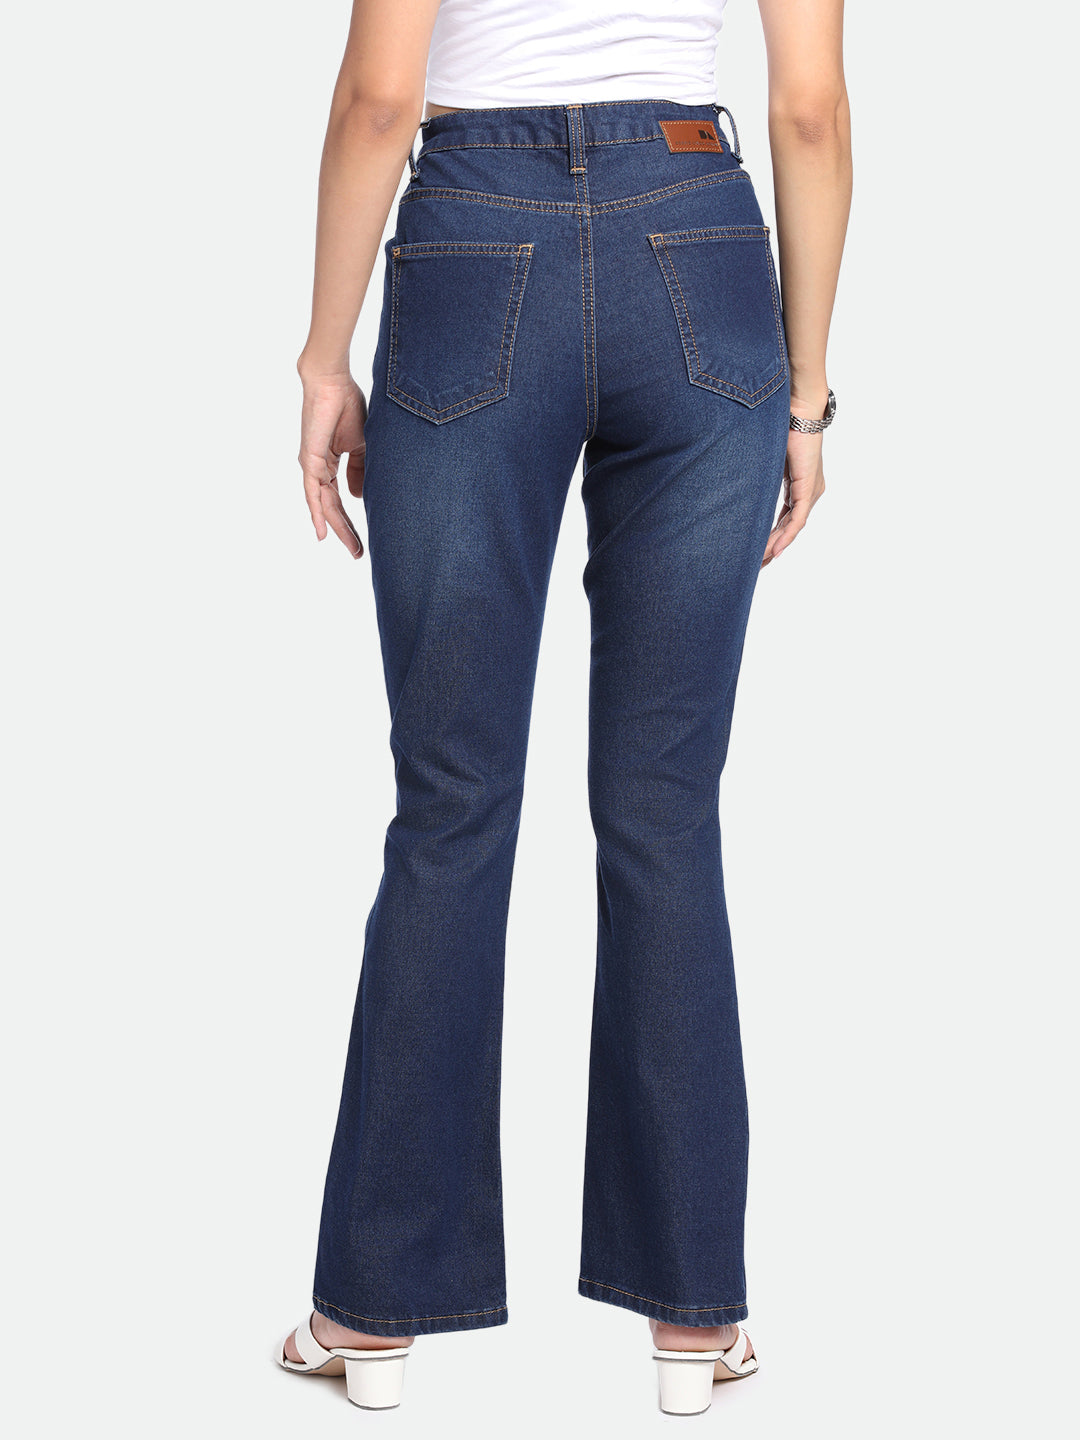 DL Woman Indigo Blue Bootcut Jeans